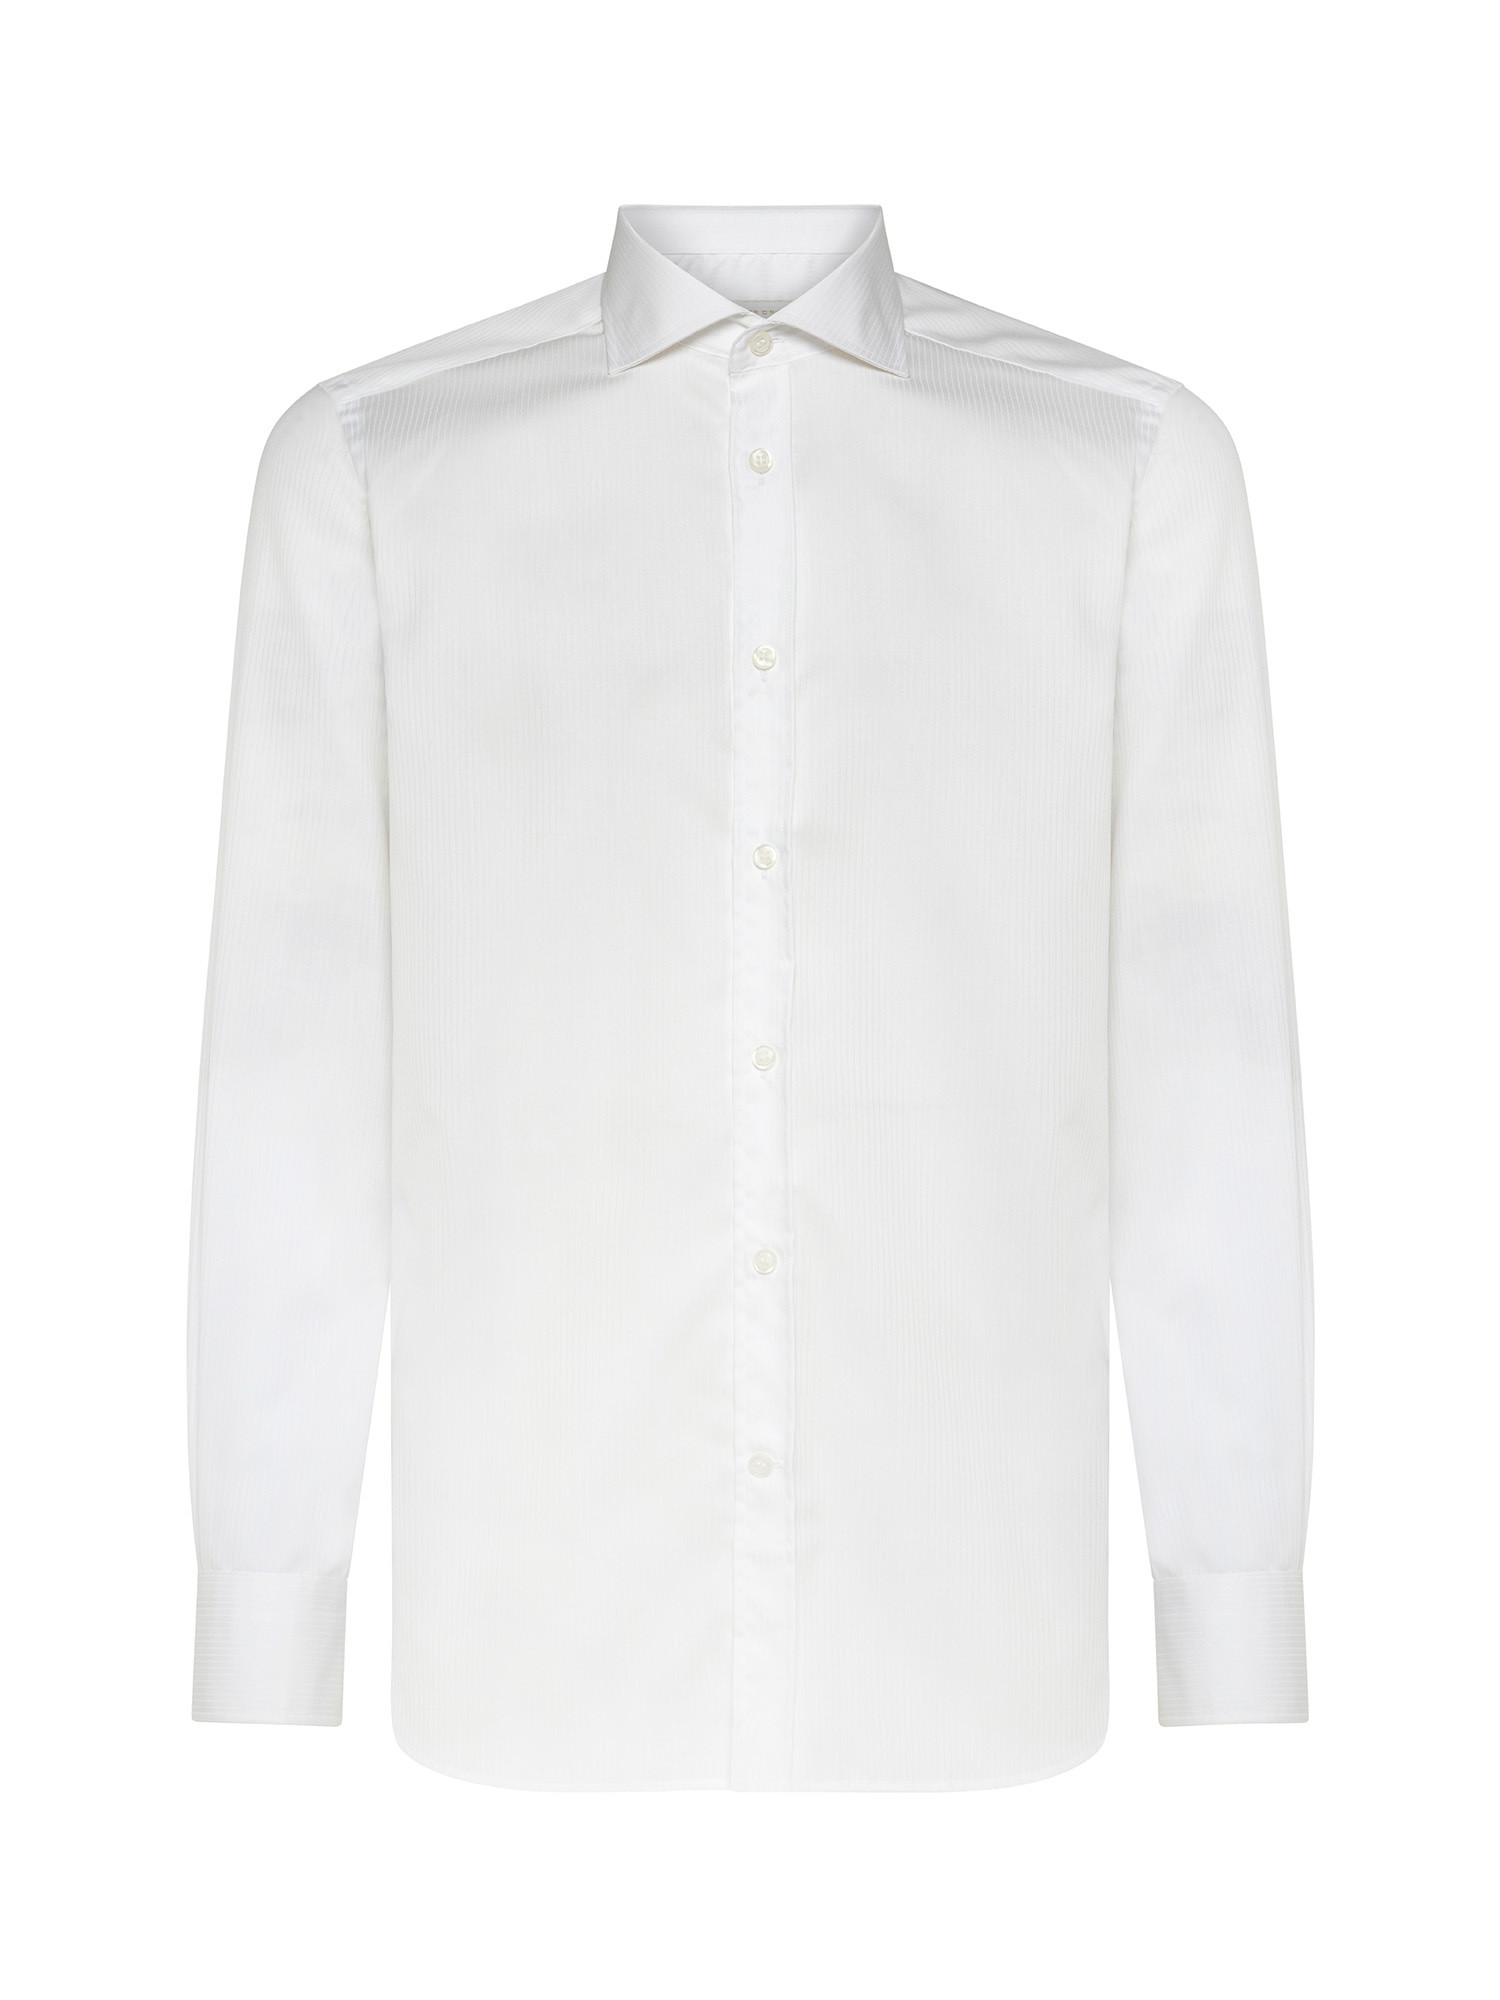 Camicia slim fit in puro cotone, Bianco 3, large image number 1